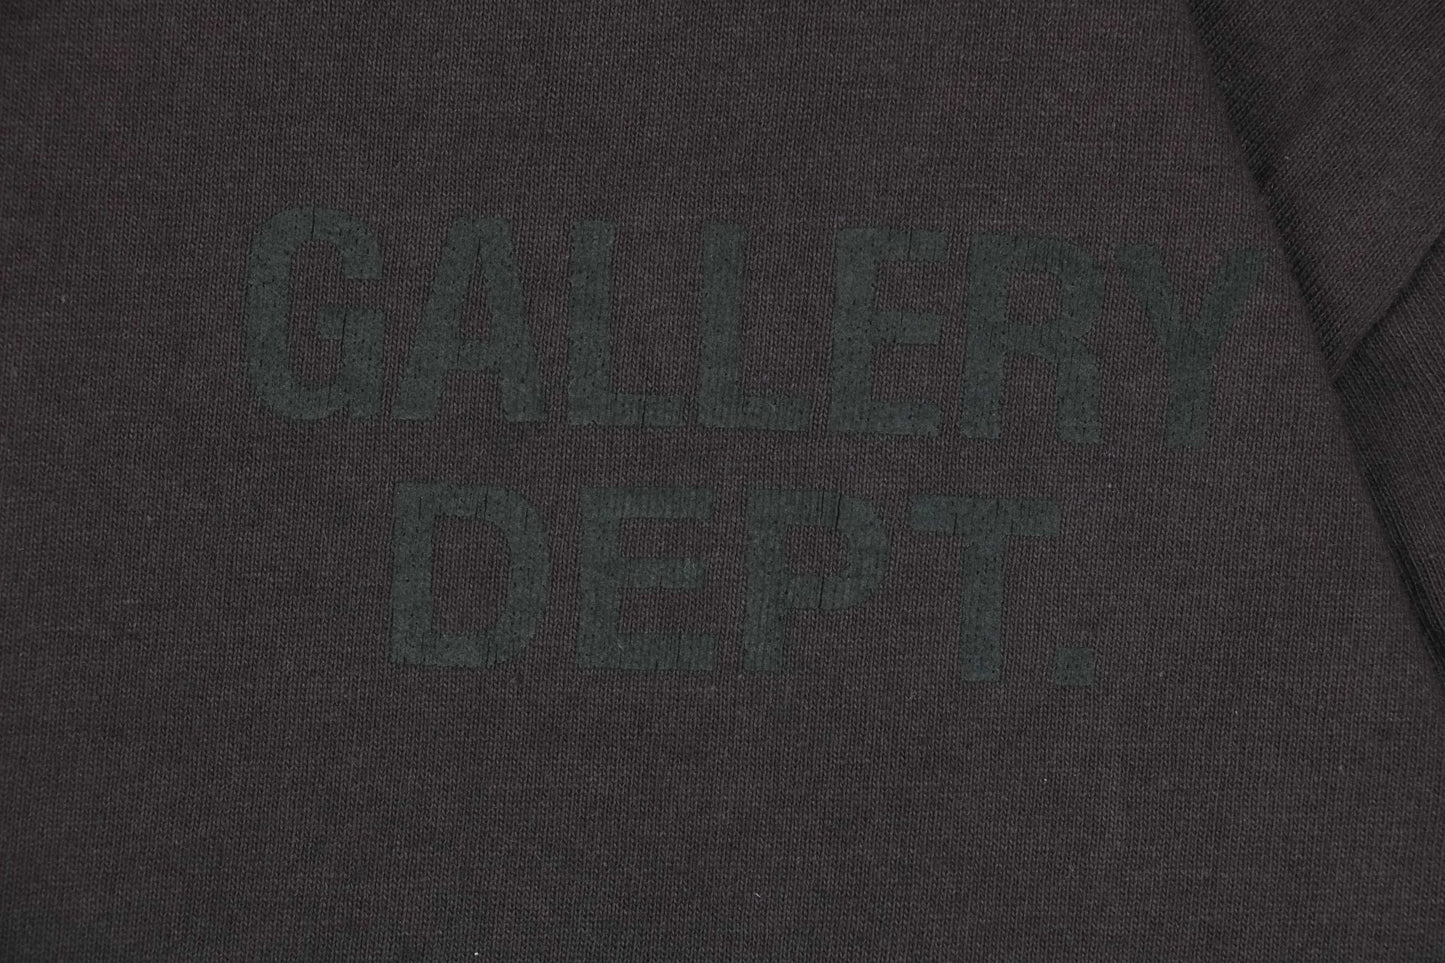 Gallery Dept Security Long Black Sweatshirt